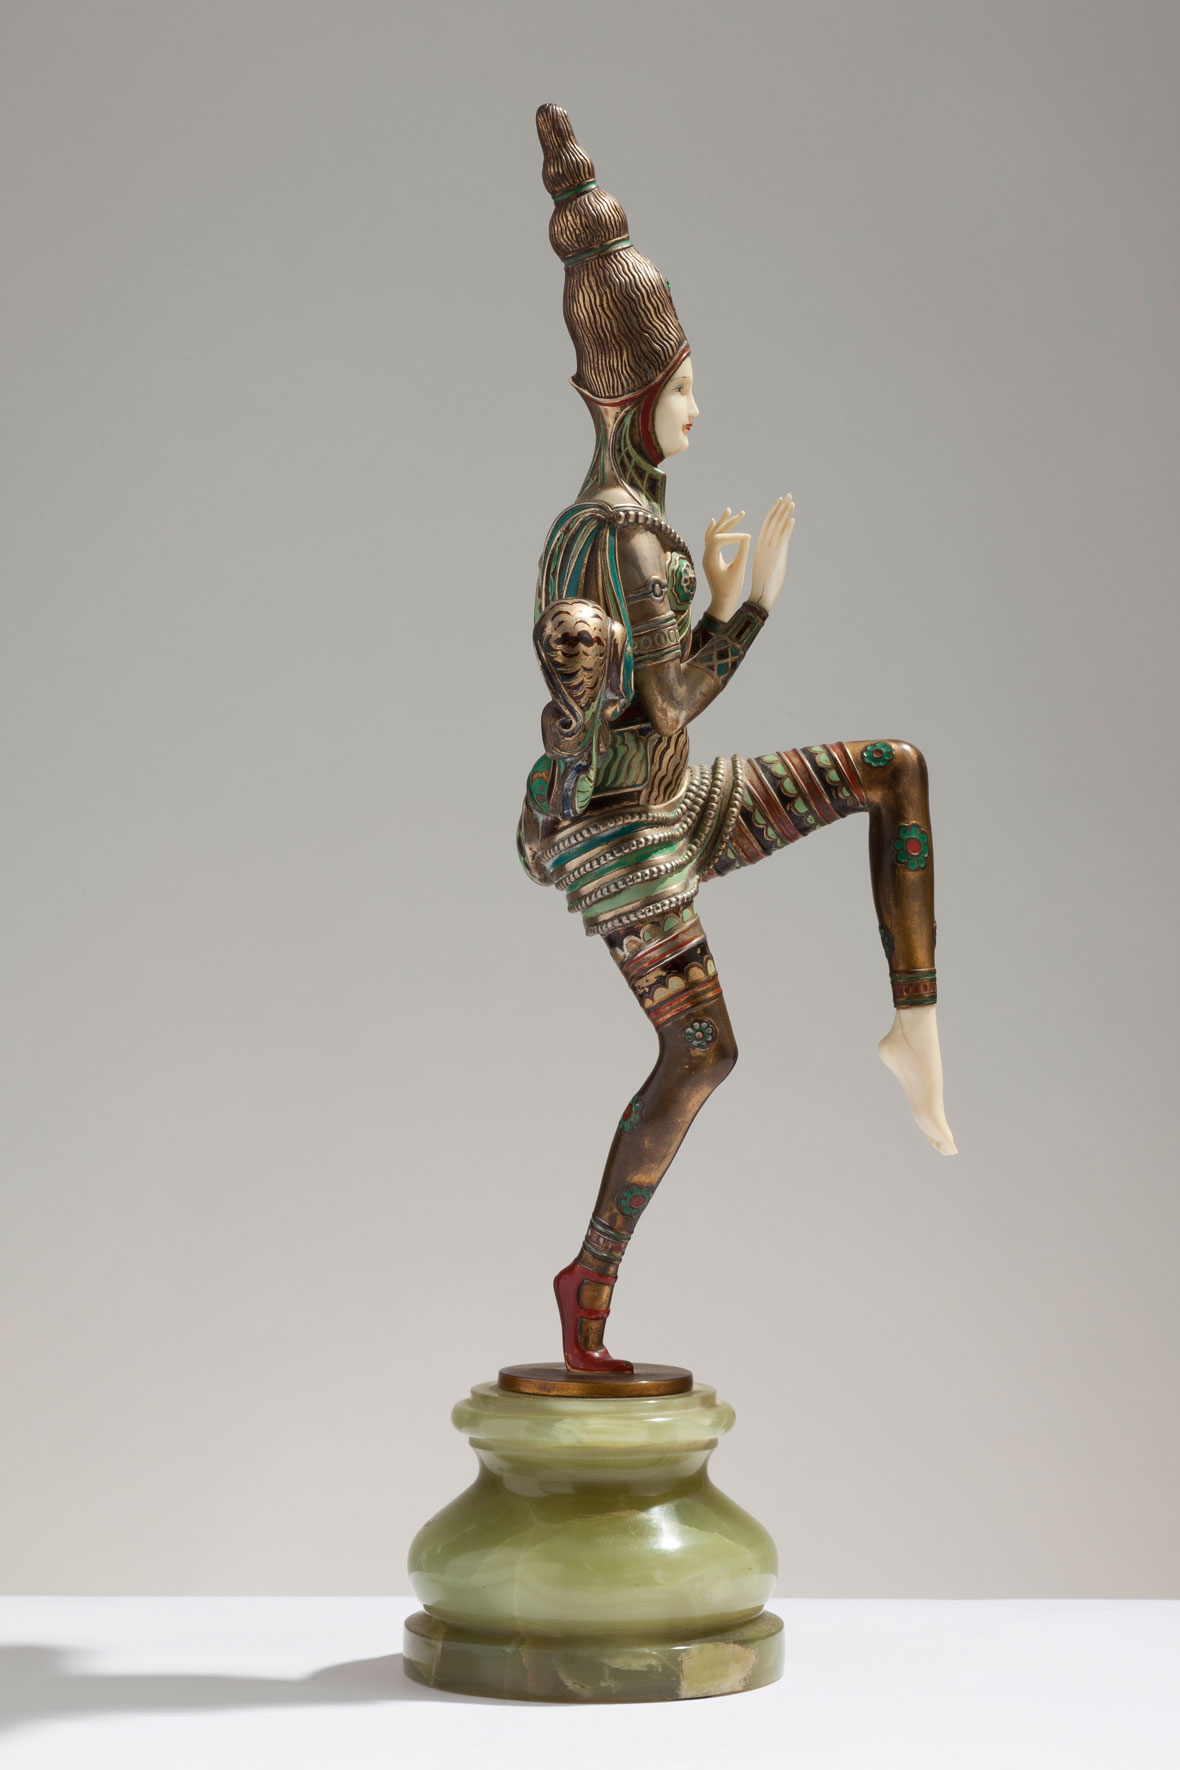 Temple Dancer by Gerdago